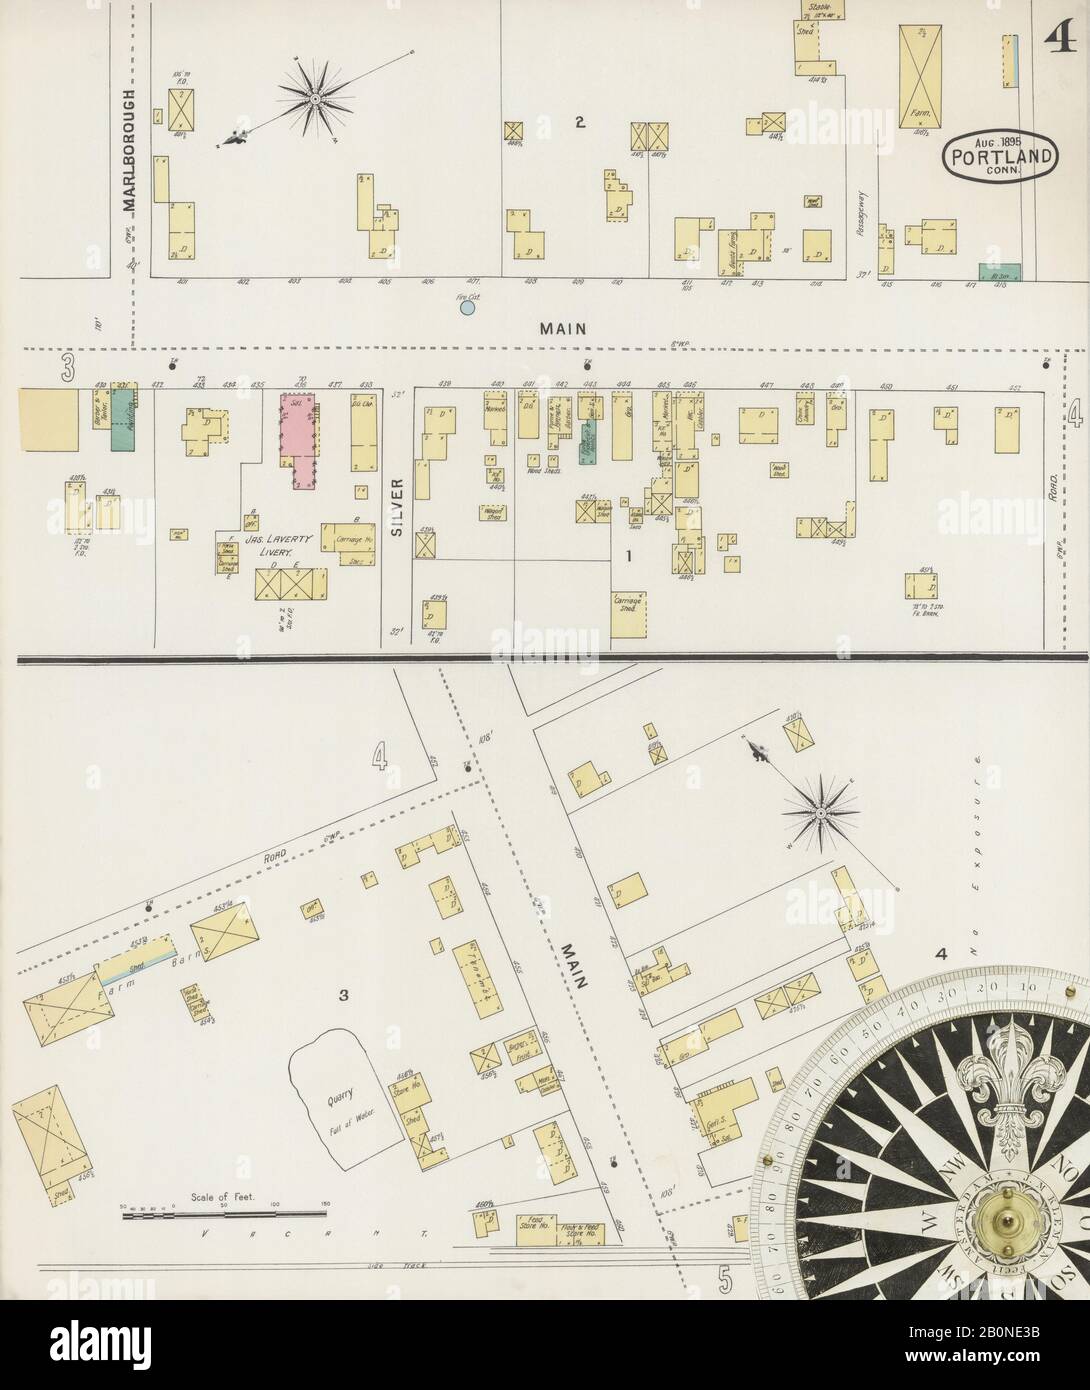 Imagen 4 De Sanborn Fire Insurance Map De Portland, Condado De Middlesex, Connecticut. Ago 1895. 6 Hoja(s), América, mapa de calles con una brújula del siglo Xix Foto de stock